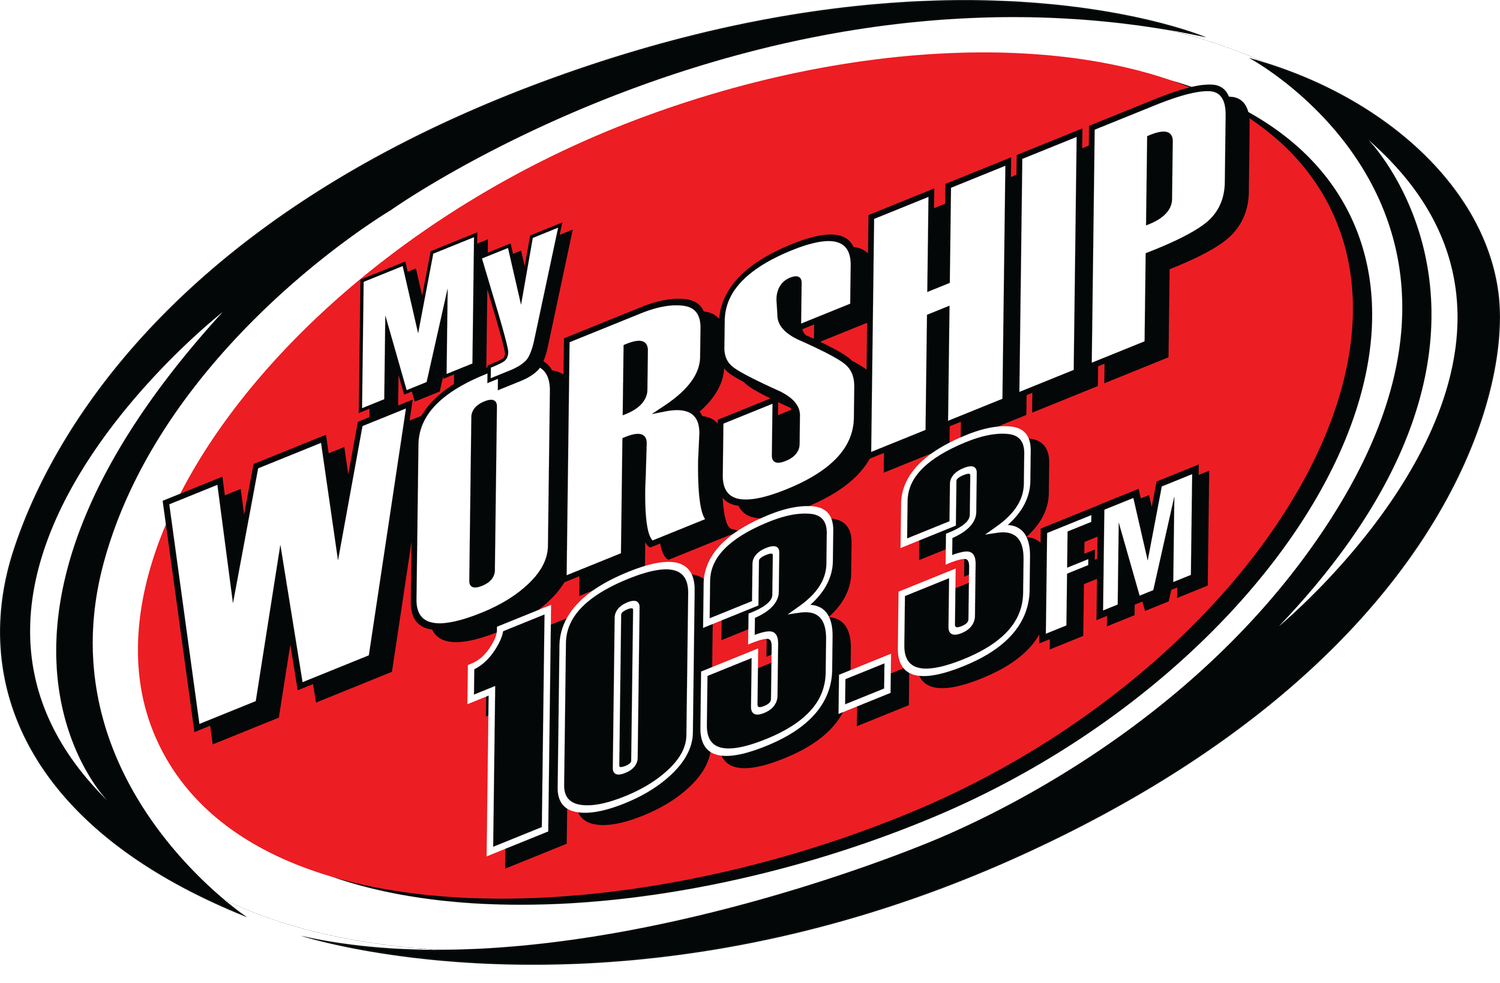 My Worship FM